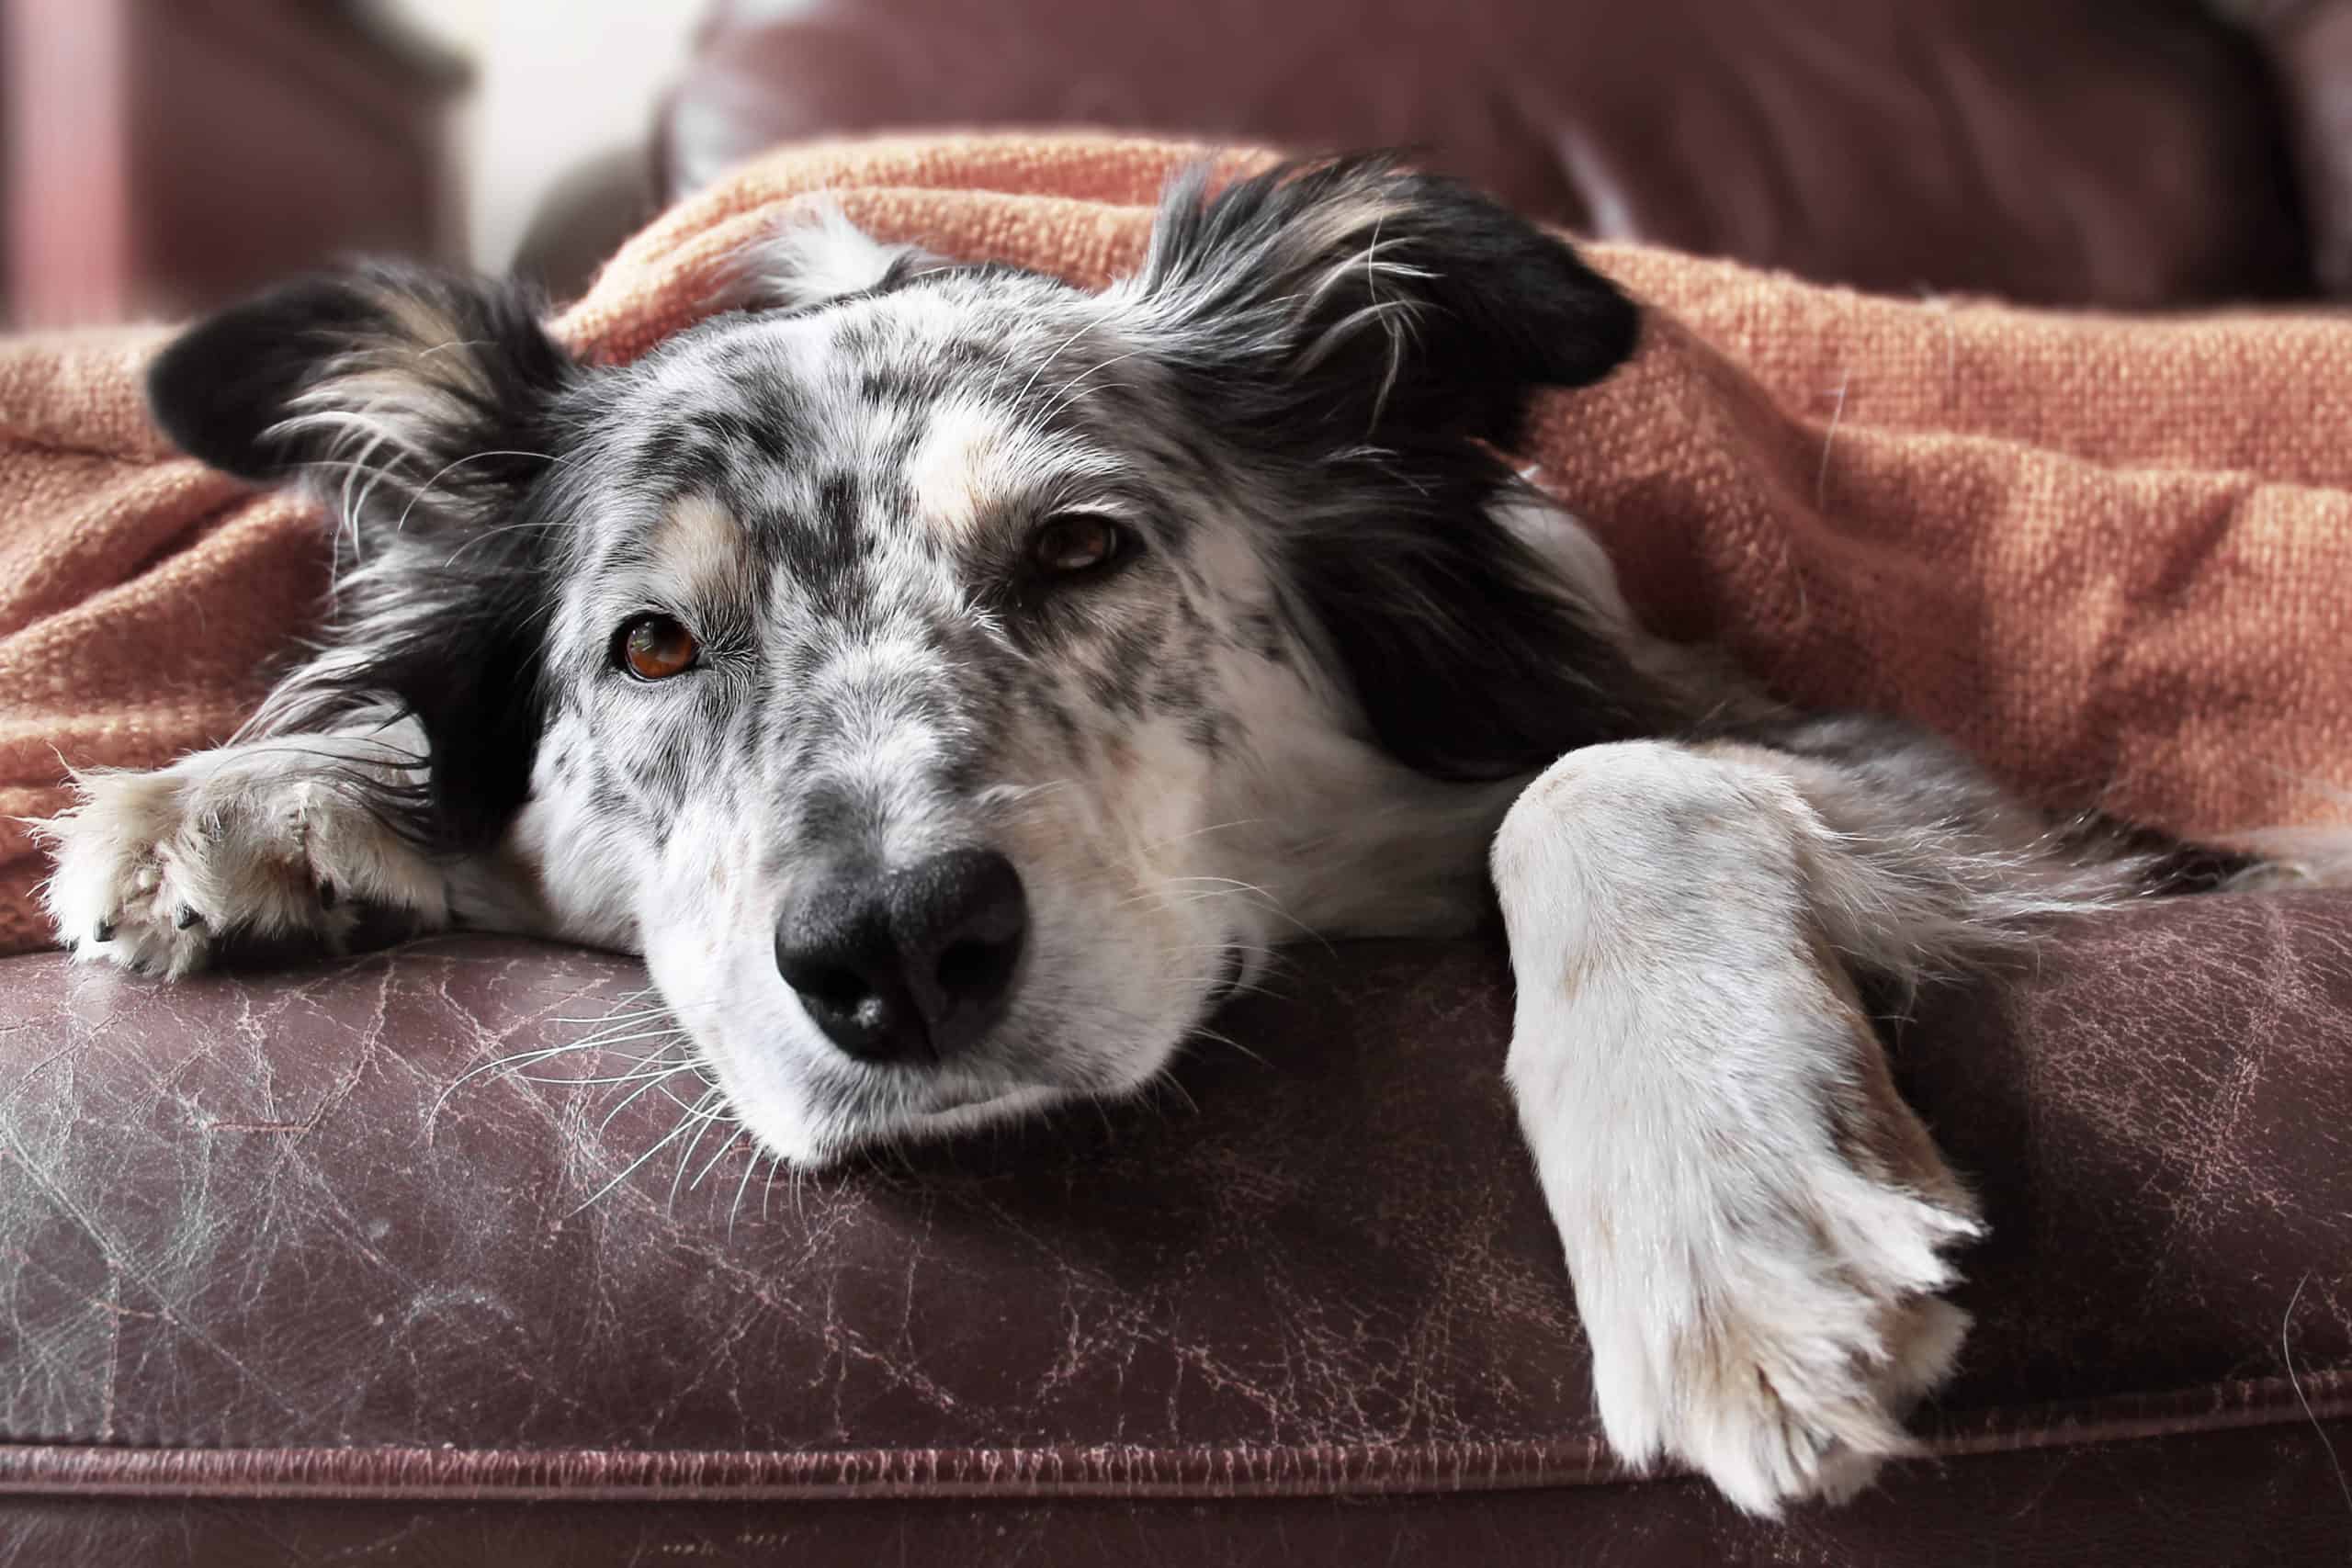 Do antibiotics make dogs tired?